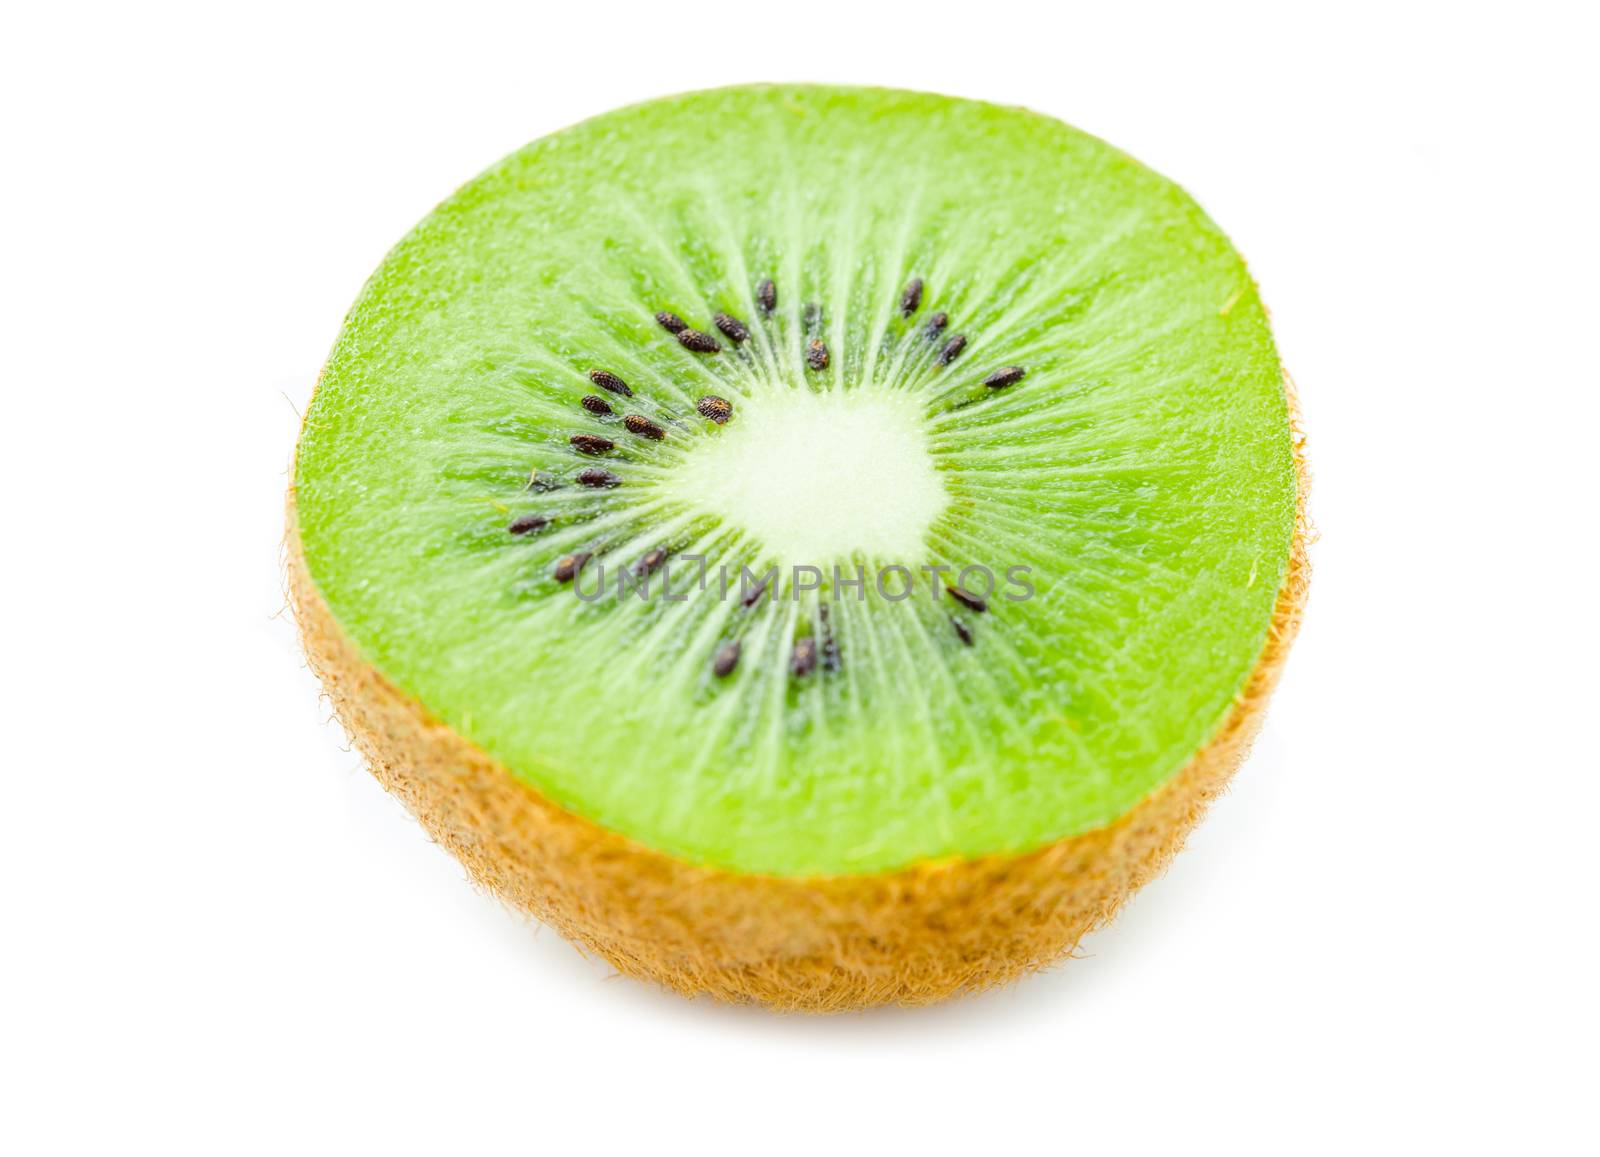 Kiwi fruits by Gamjai